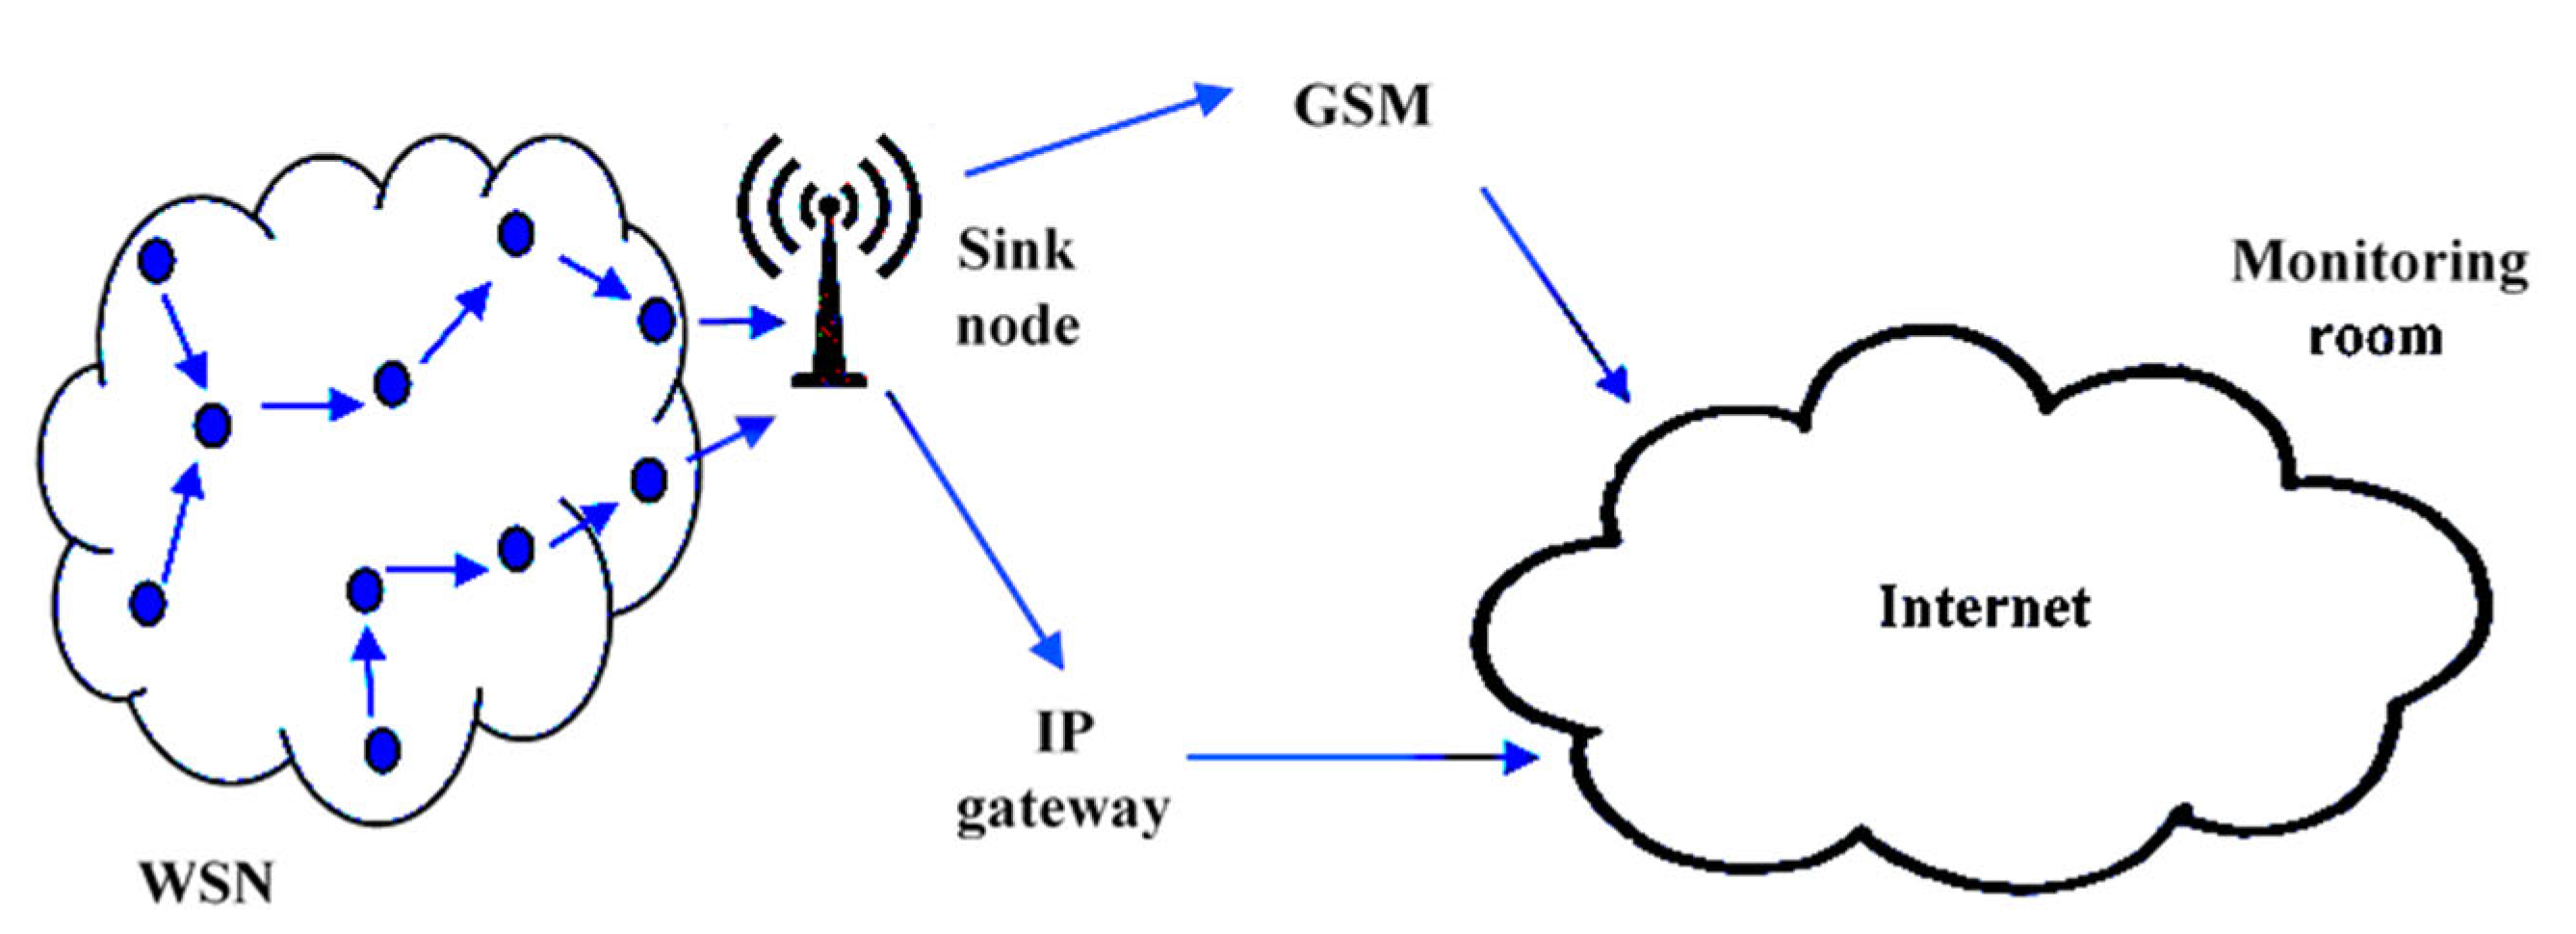 Wireless Sensor Network Architecture for Environmental Monitoring